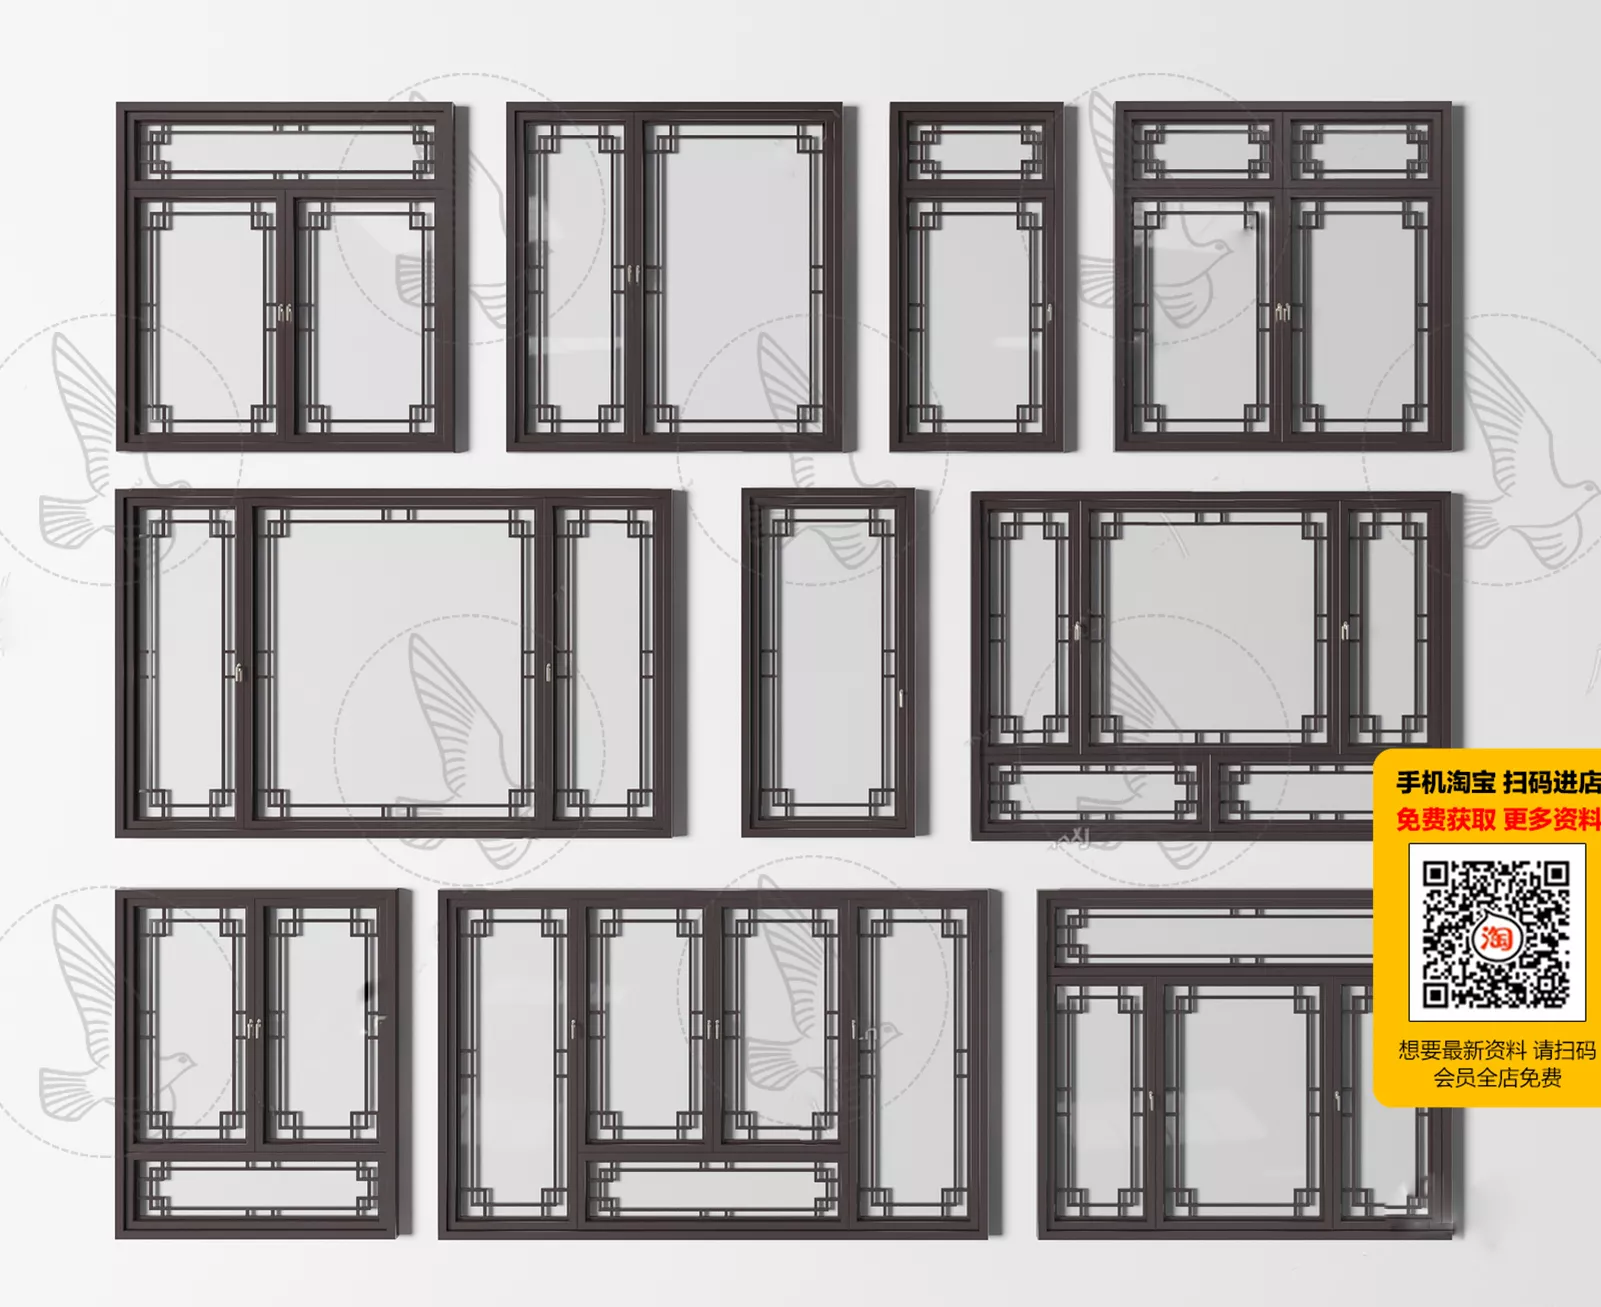 MODERN WINDOWS - SKETCHUP 3D MODEL - VRAY OR ENSCAPE - ID16685